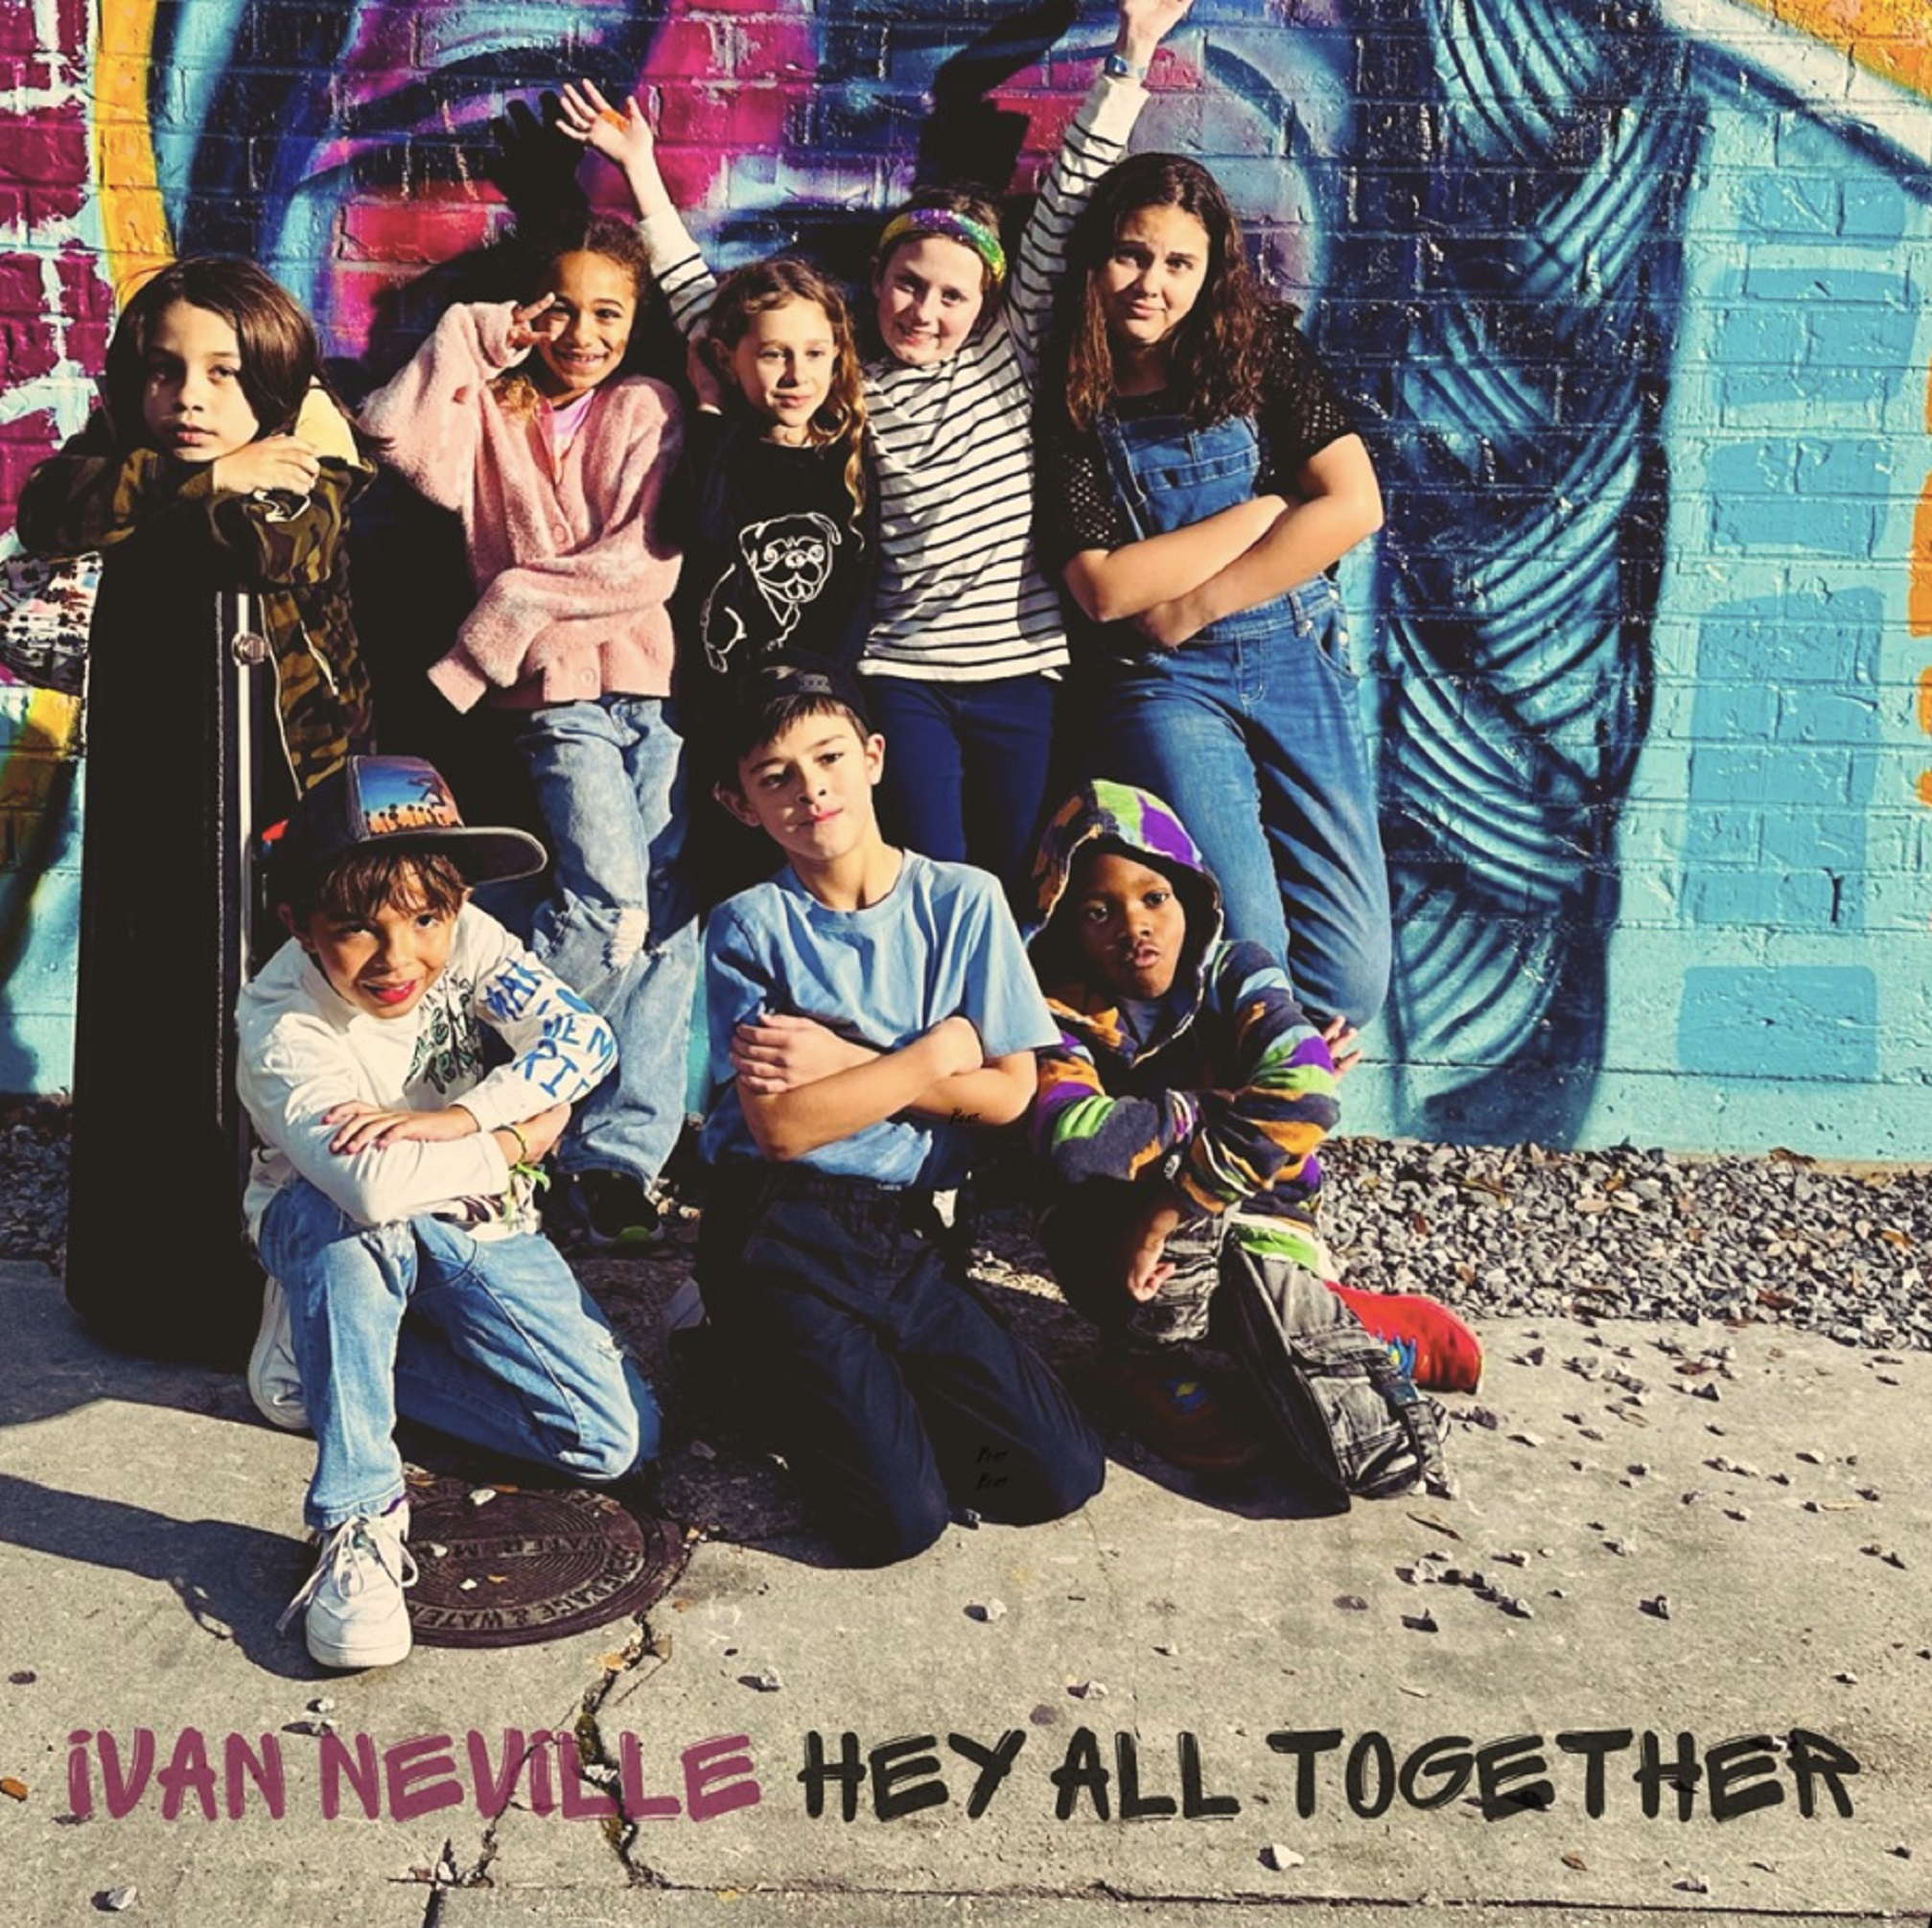 Ivan Neville enlists Bonnie Raitt, Trombone Shorty for uplifting new single "Hey All Together"